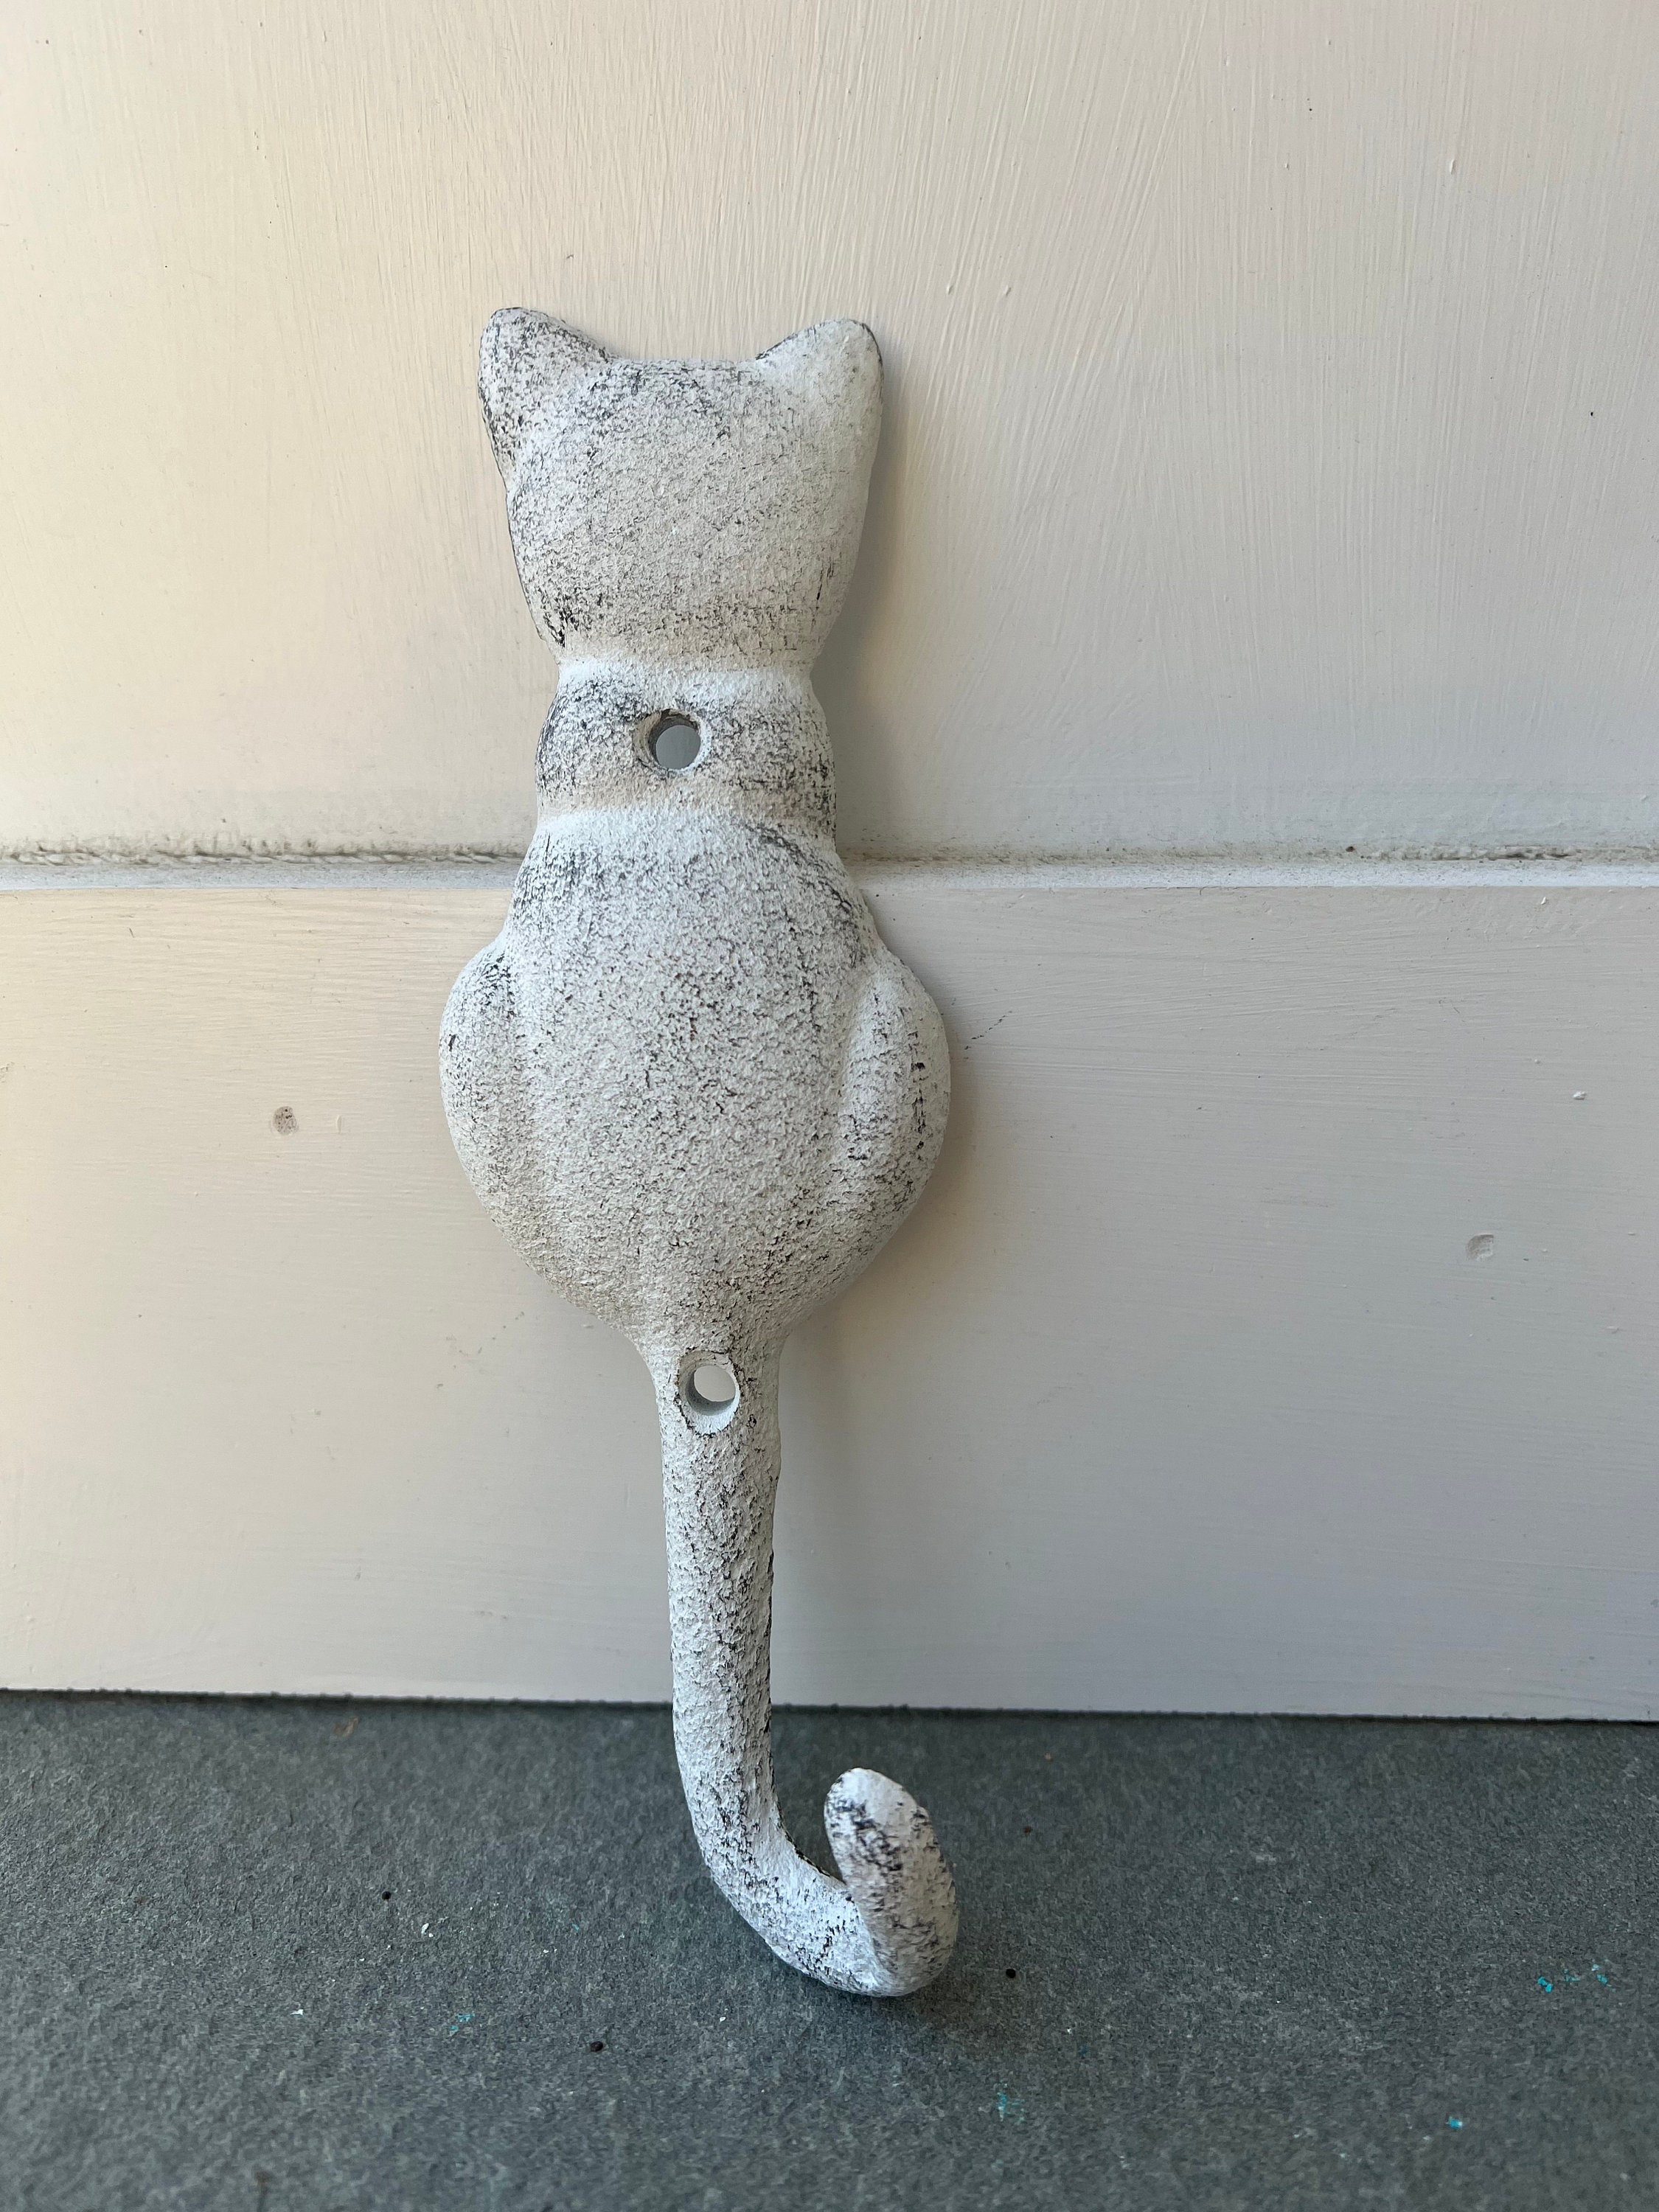  XINGJIANG Cast Iron Cat Key Hooks for Wall Decorative CatFamily Key  Holder Leash Holder Black Cat Wall Hooks Hanger Gift for Cat Lovers, Cat  Key Holder for Hanging Keys Coat Towel